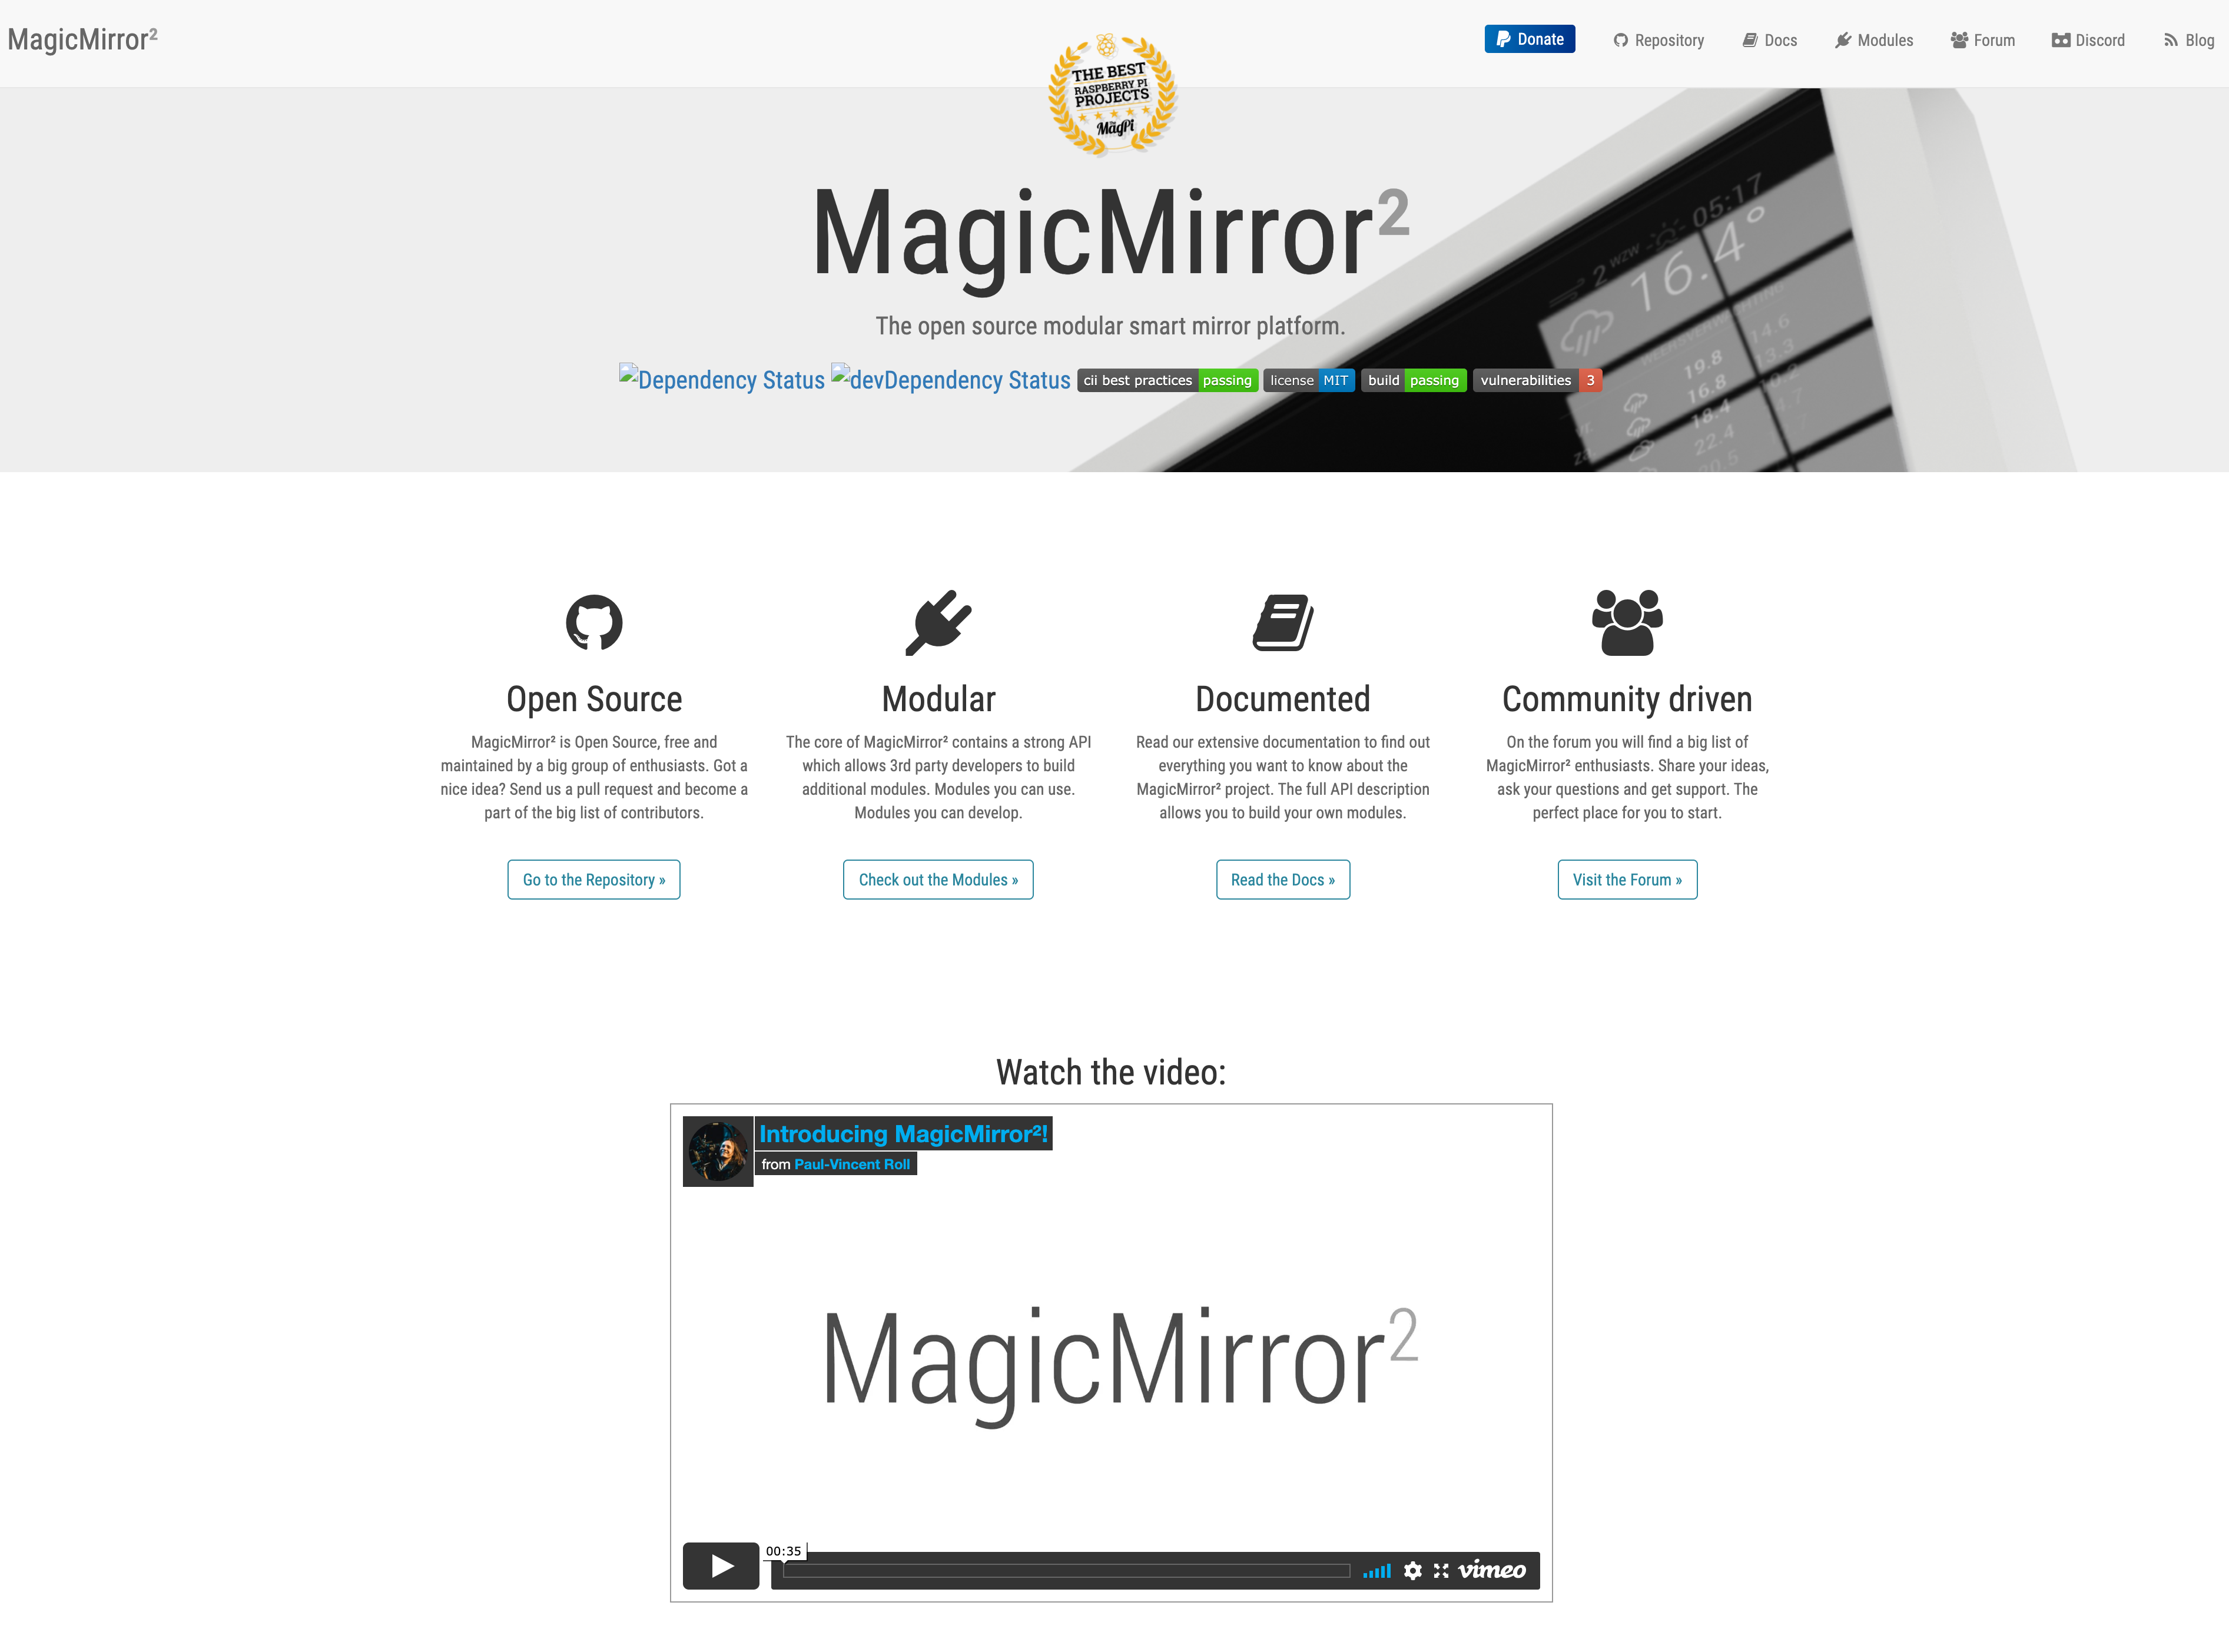 Screenshot of MagicMirror open source home page